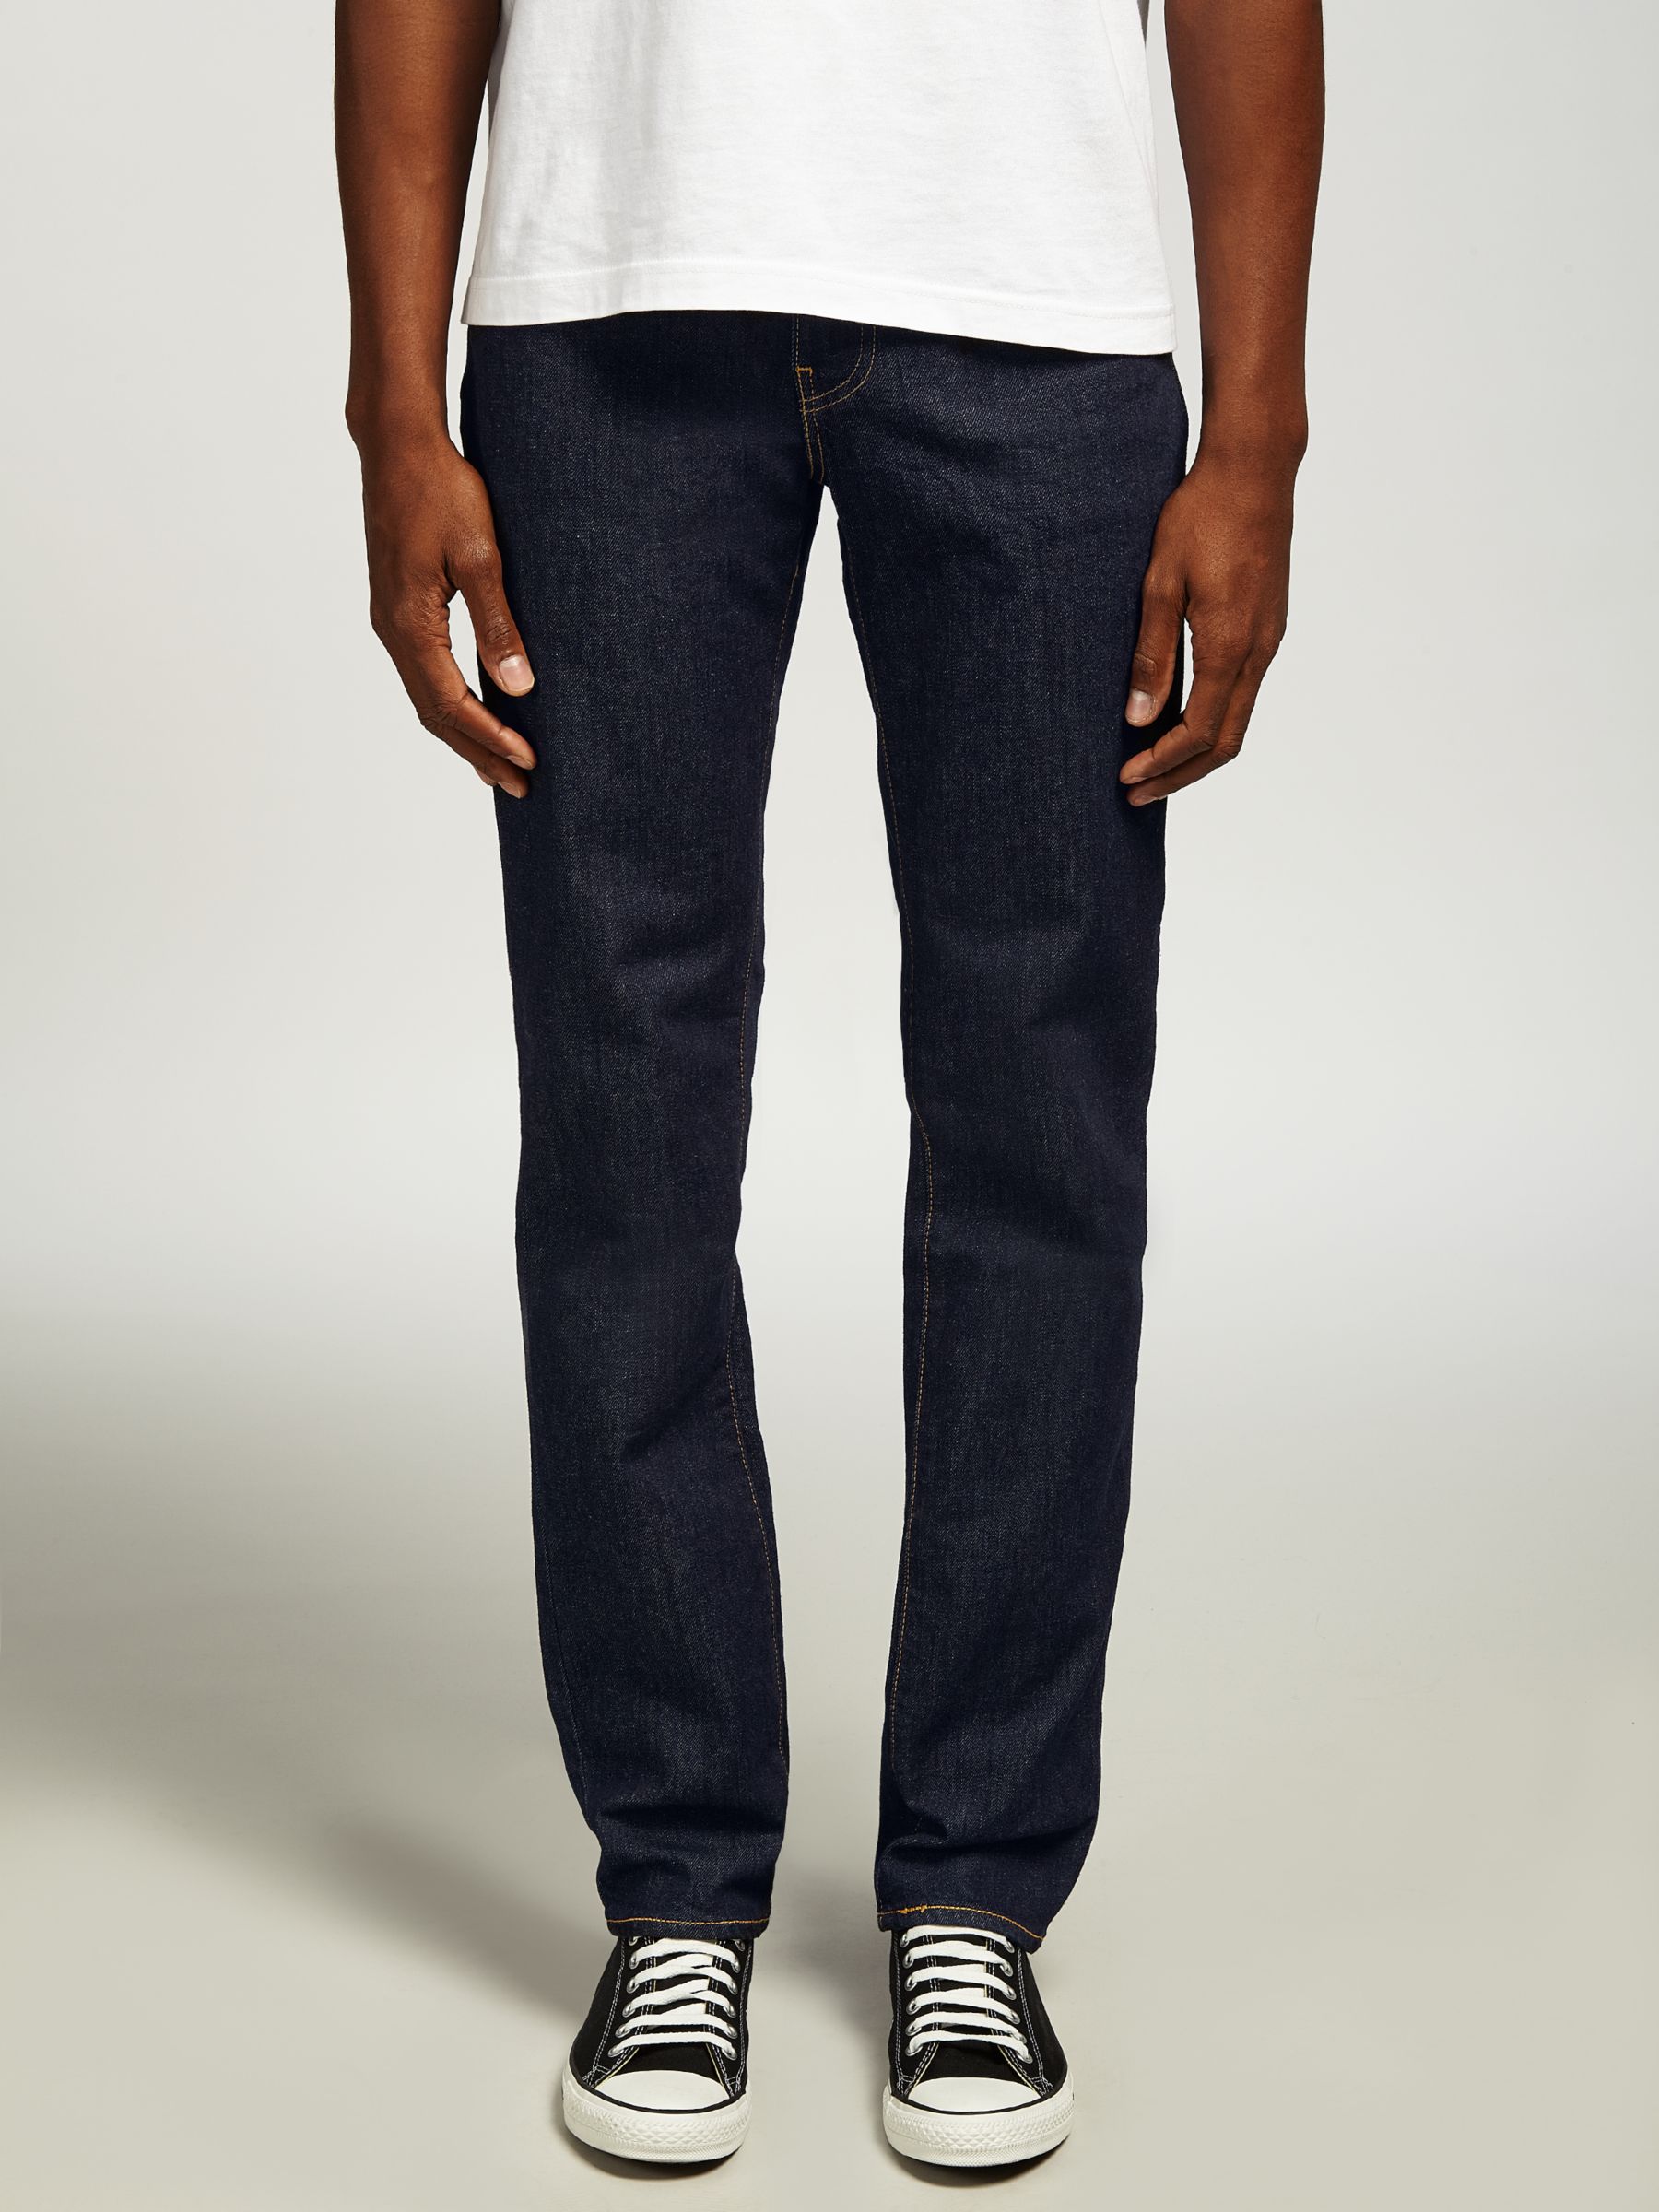 Men's Jeans Fits, Types & Styles | John Lewis & Partners